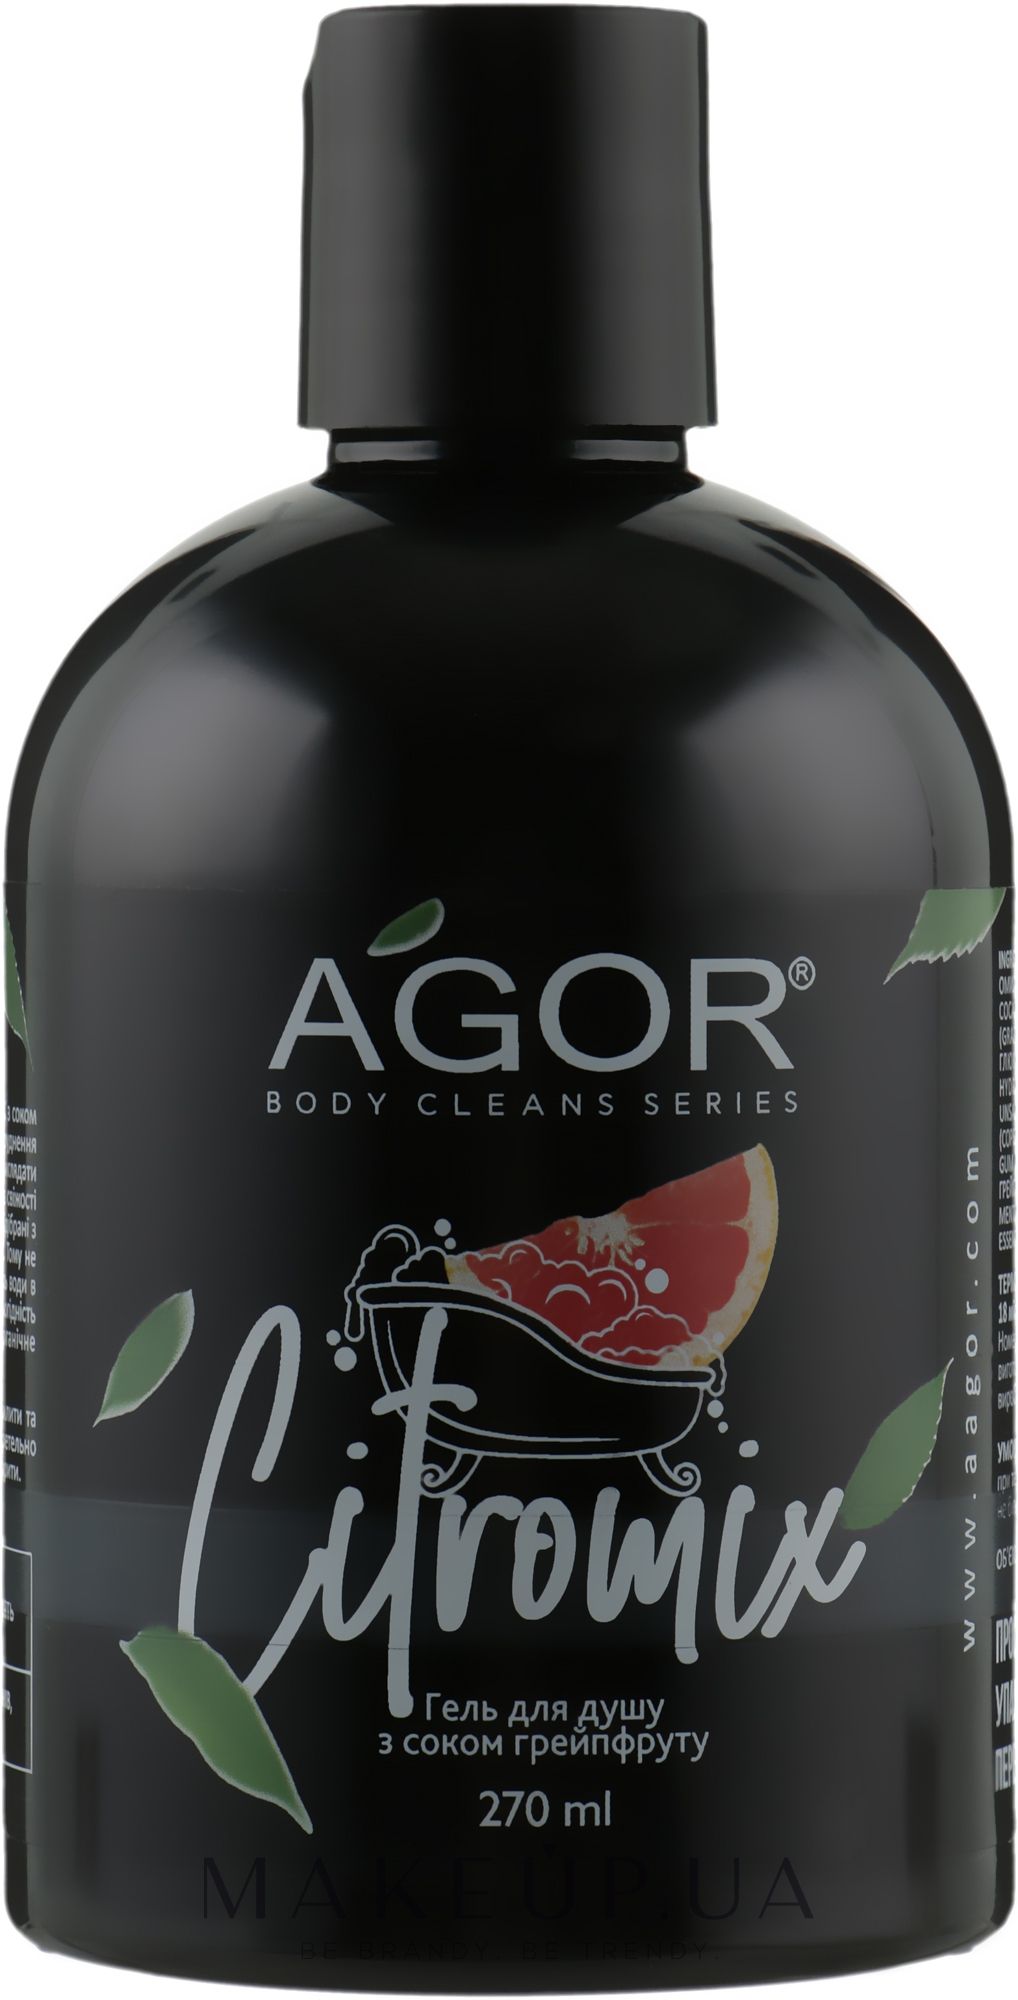 Гель для душа с соком грейпфрута - Agor Body Cleans Series Citromix Shower Gel — фото 270ml